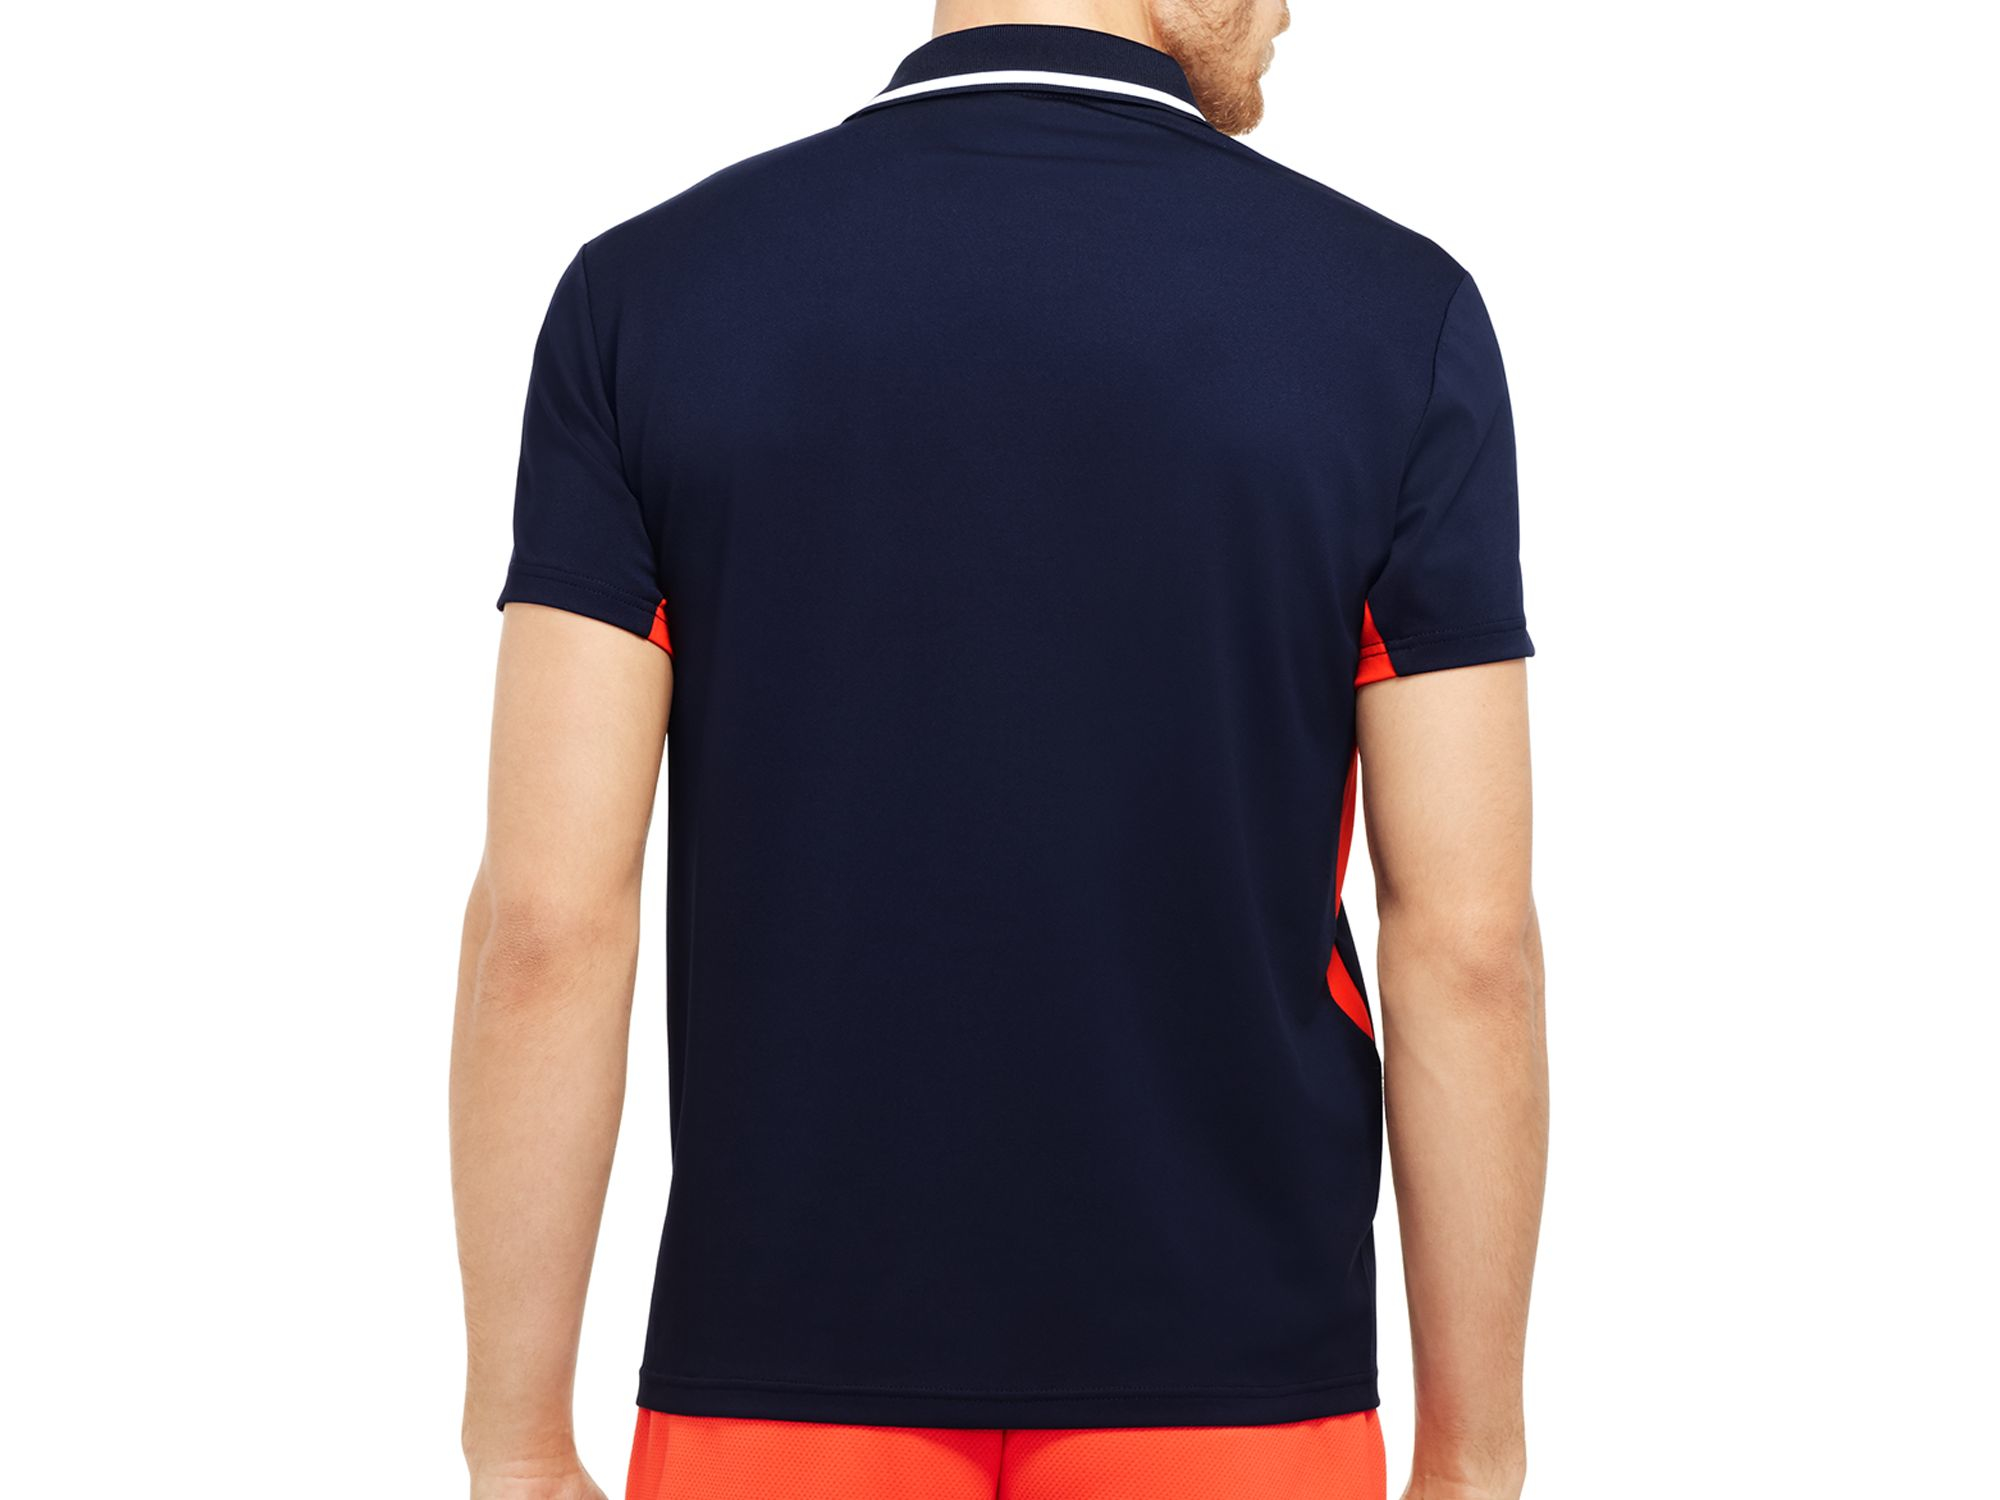 Lyst - Ralph Lauren Polo Sport Performance Mesh Rlx Polo Shirt in Blue